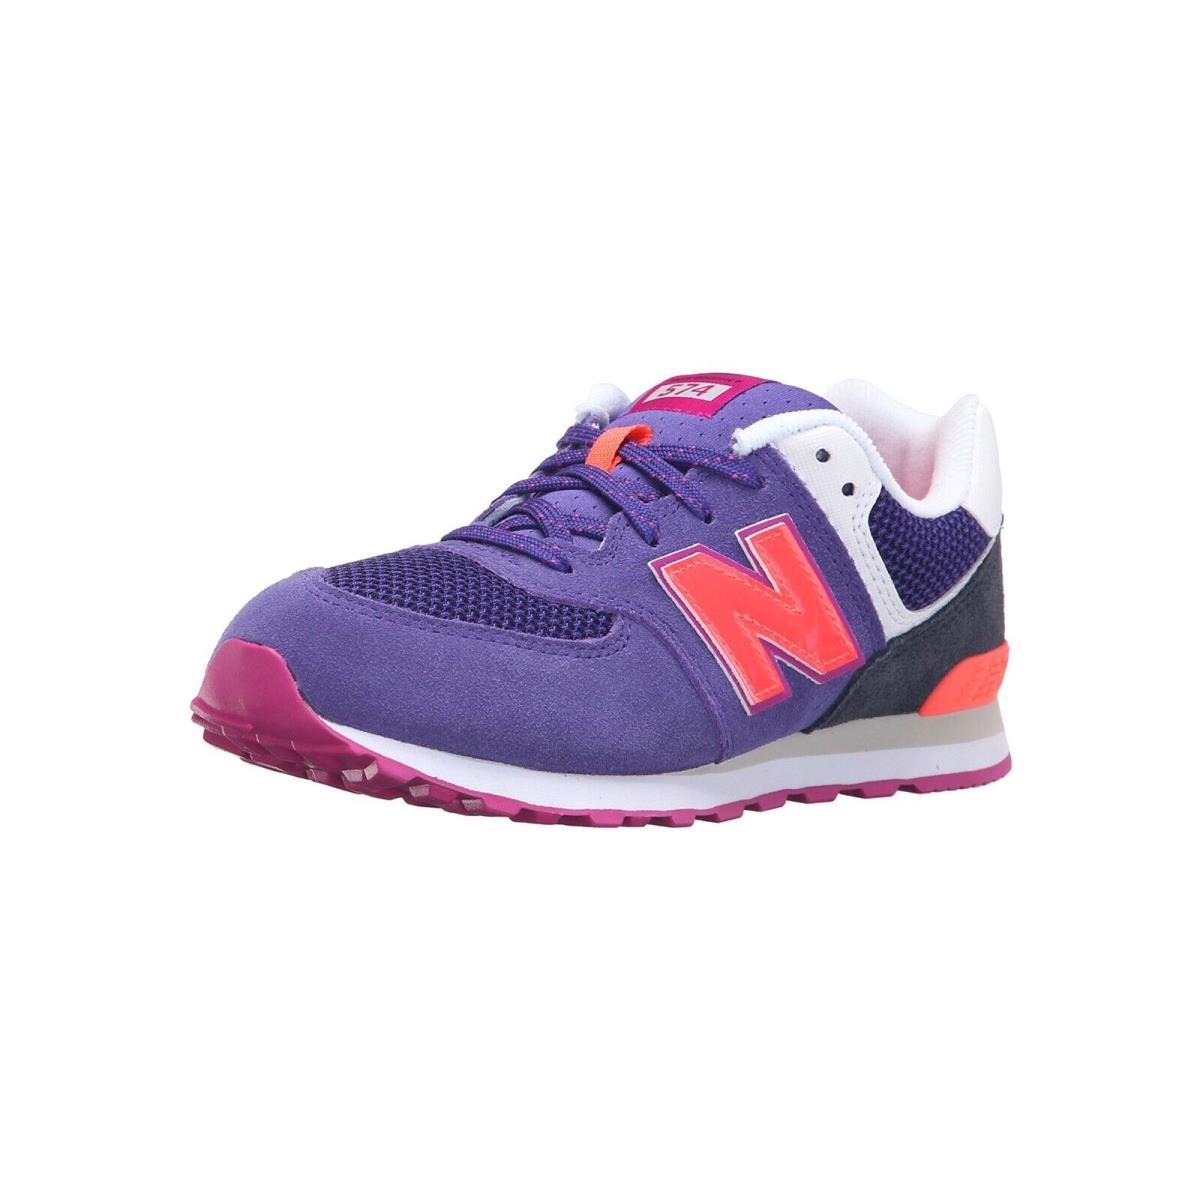 New Balance Girls Big Kids Running Shoes Sneakers KL574TJG - Purple/pink